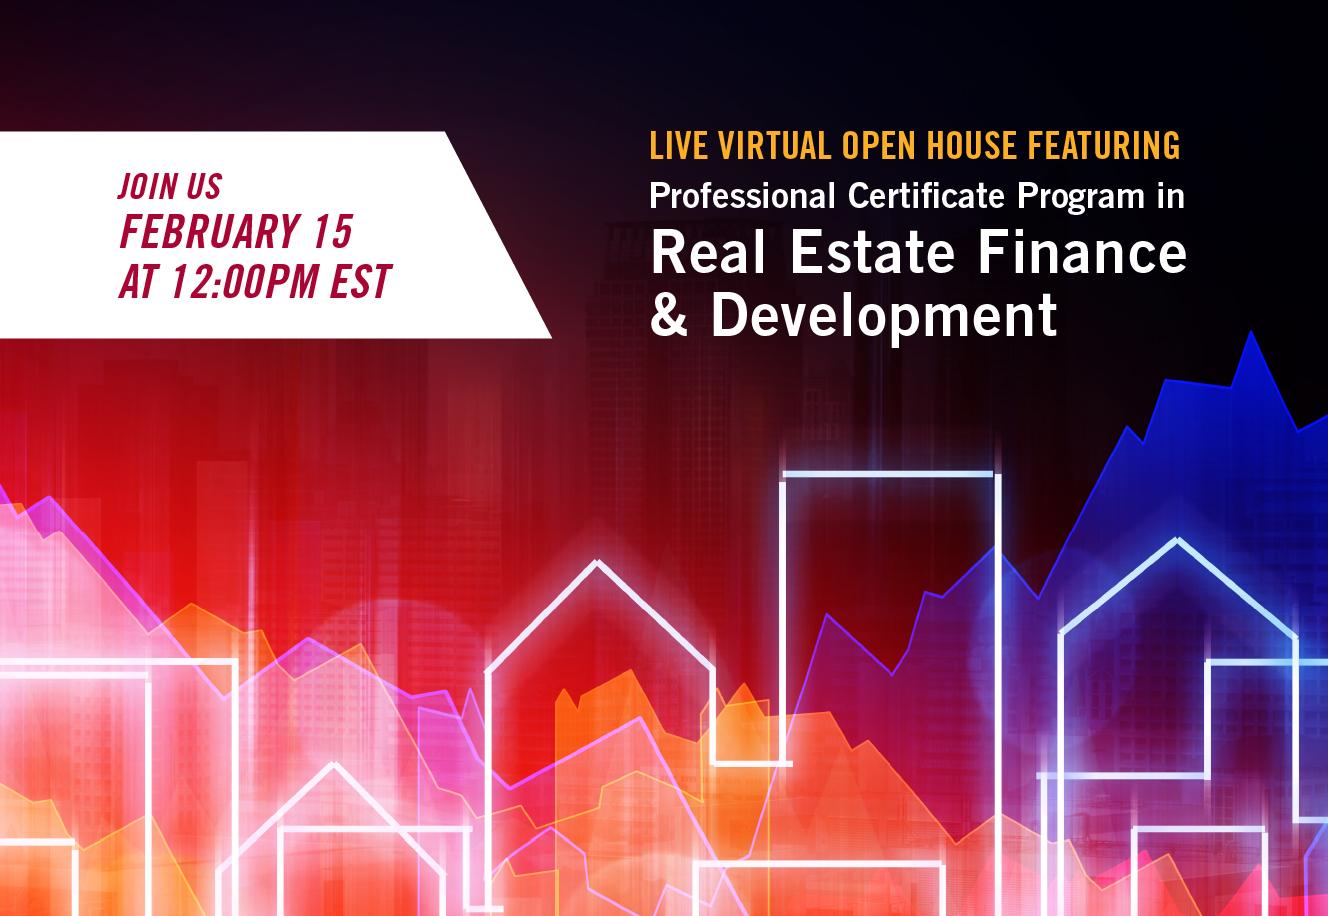 Open House Professional Certificate Program in Real Estate Finance & Development